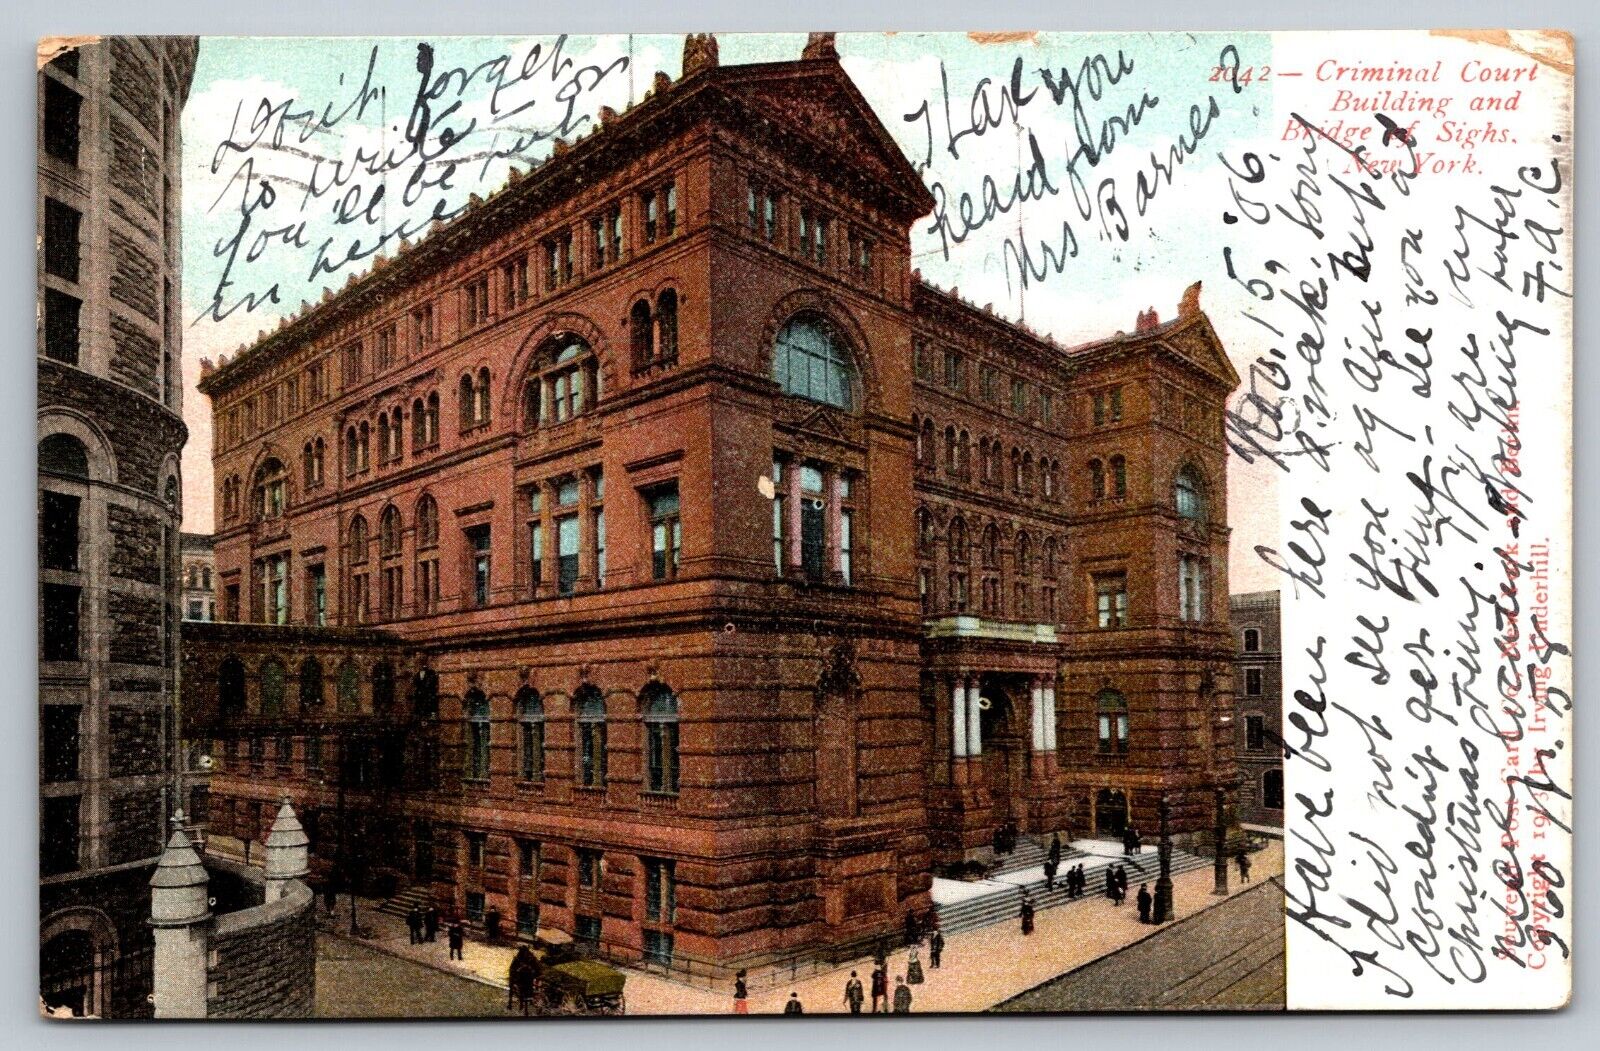  Criminal Court Bldg. & Bridge of Signs, NYC Postcard